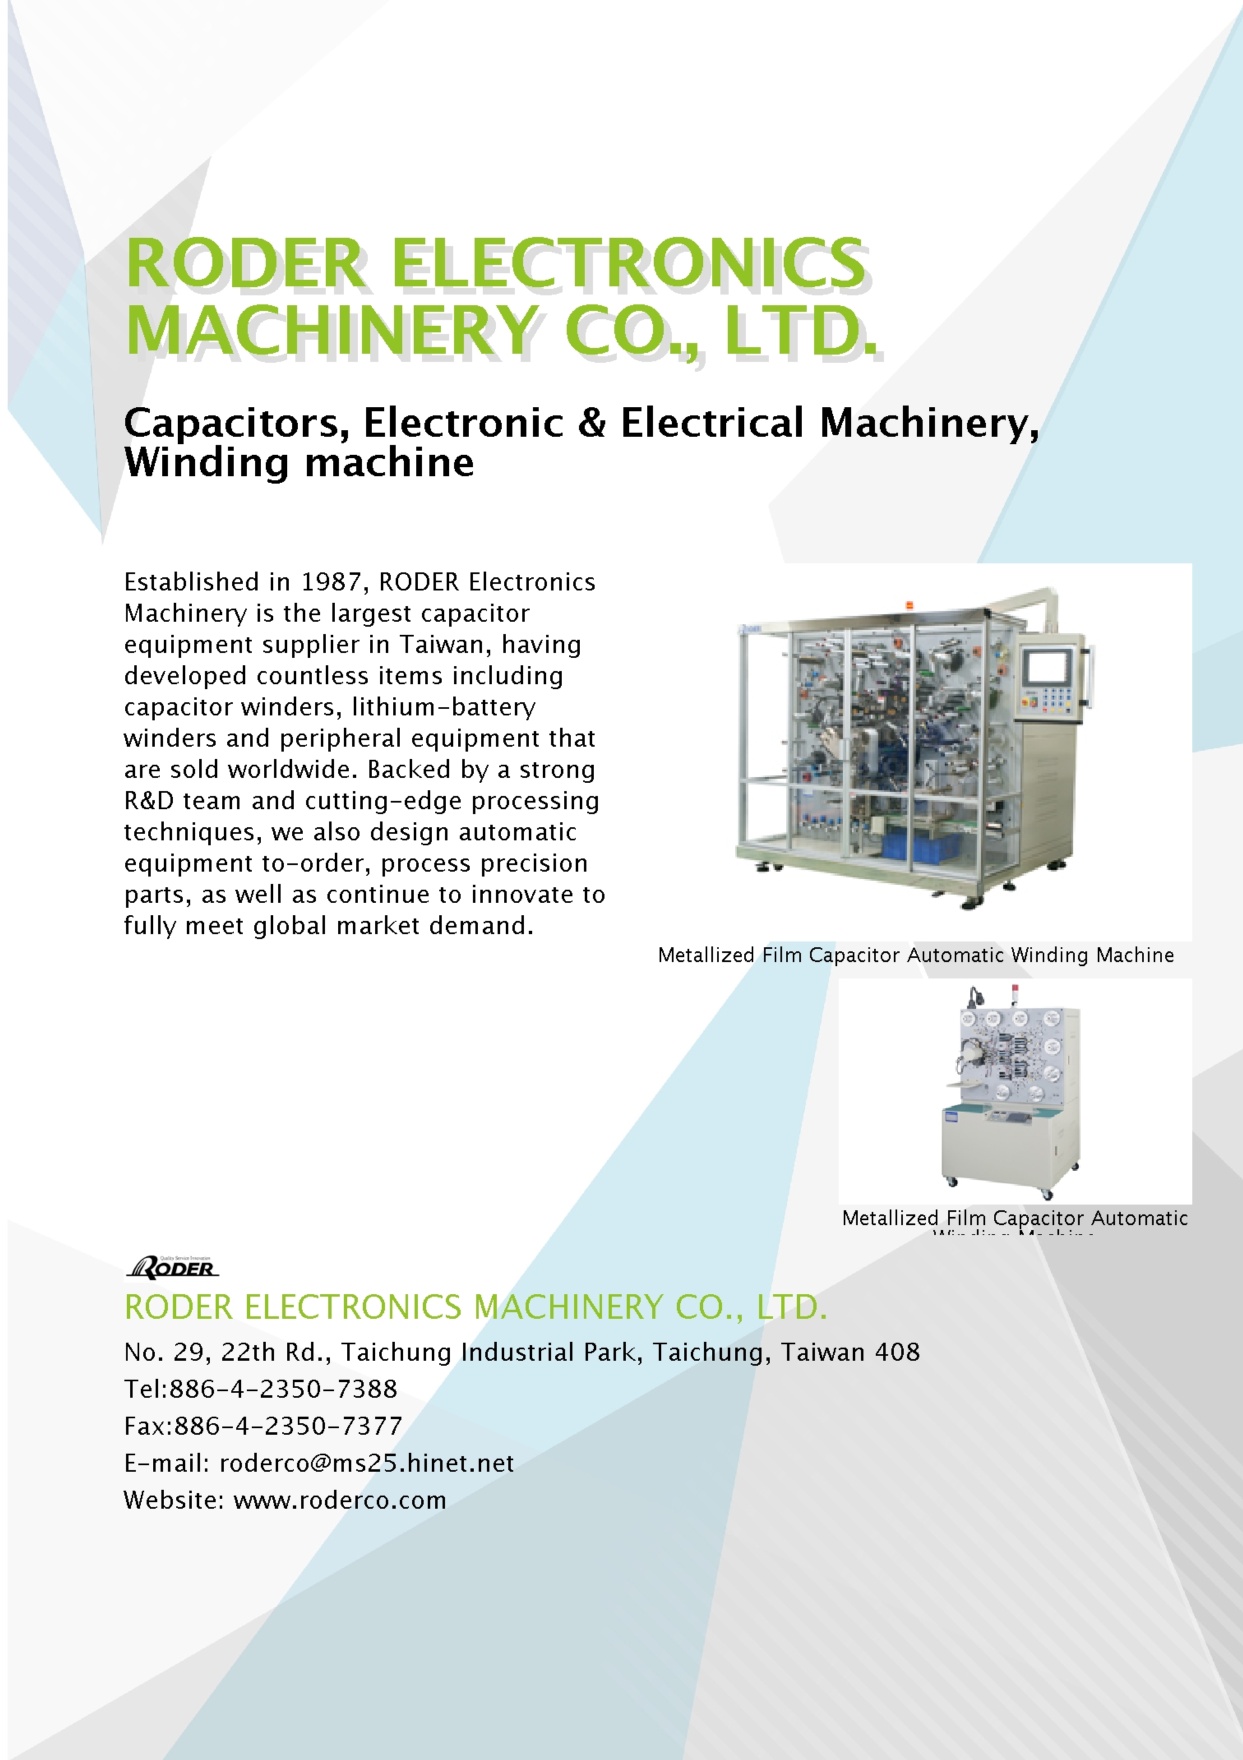 RODER ELECTRONICS MACHINERY CO., LTD.